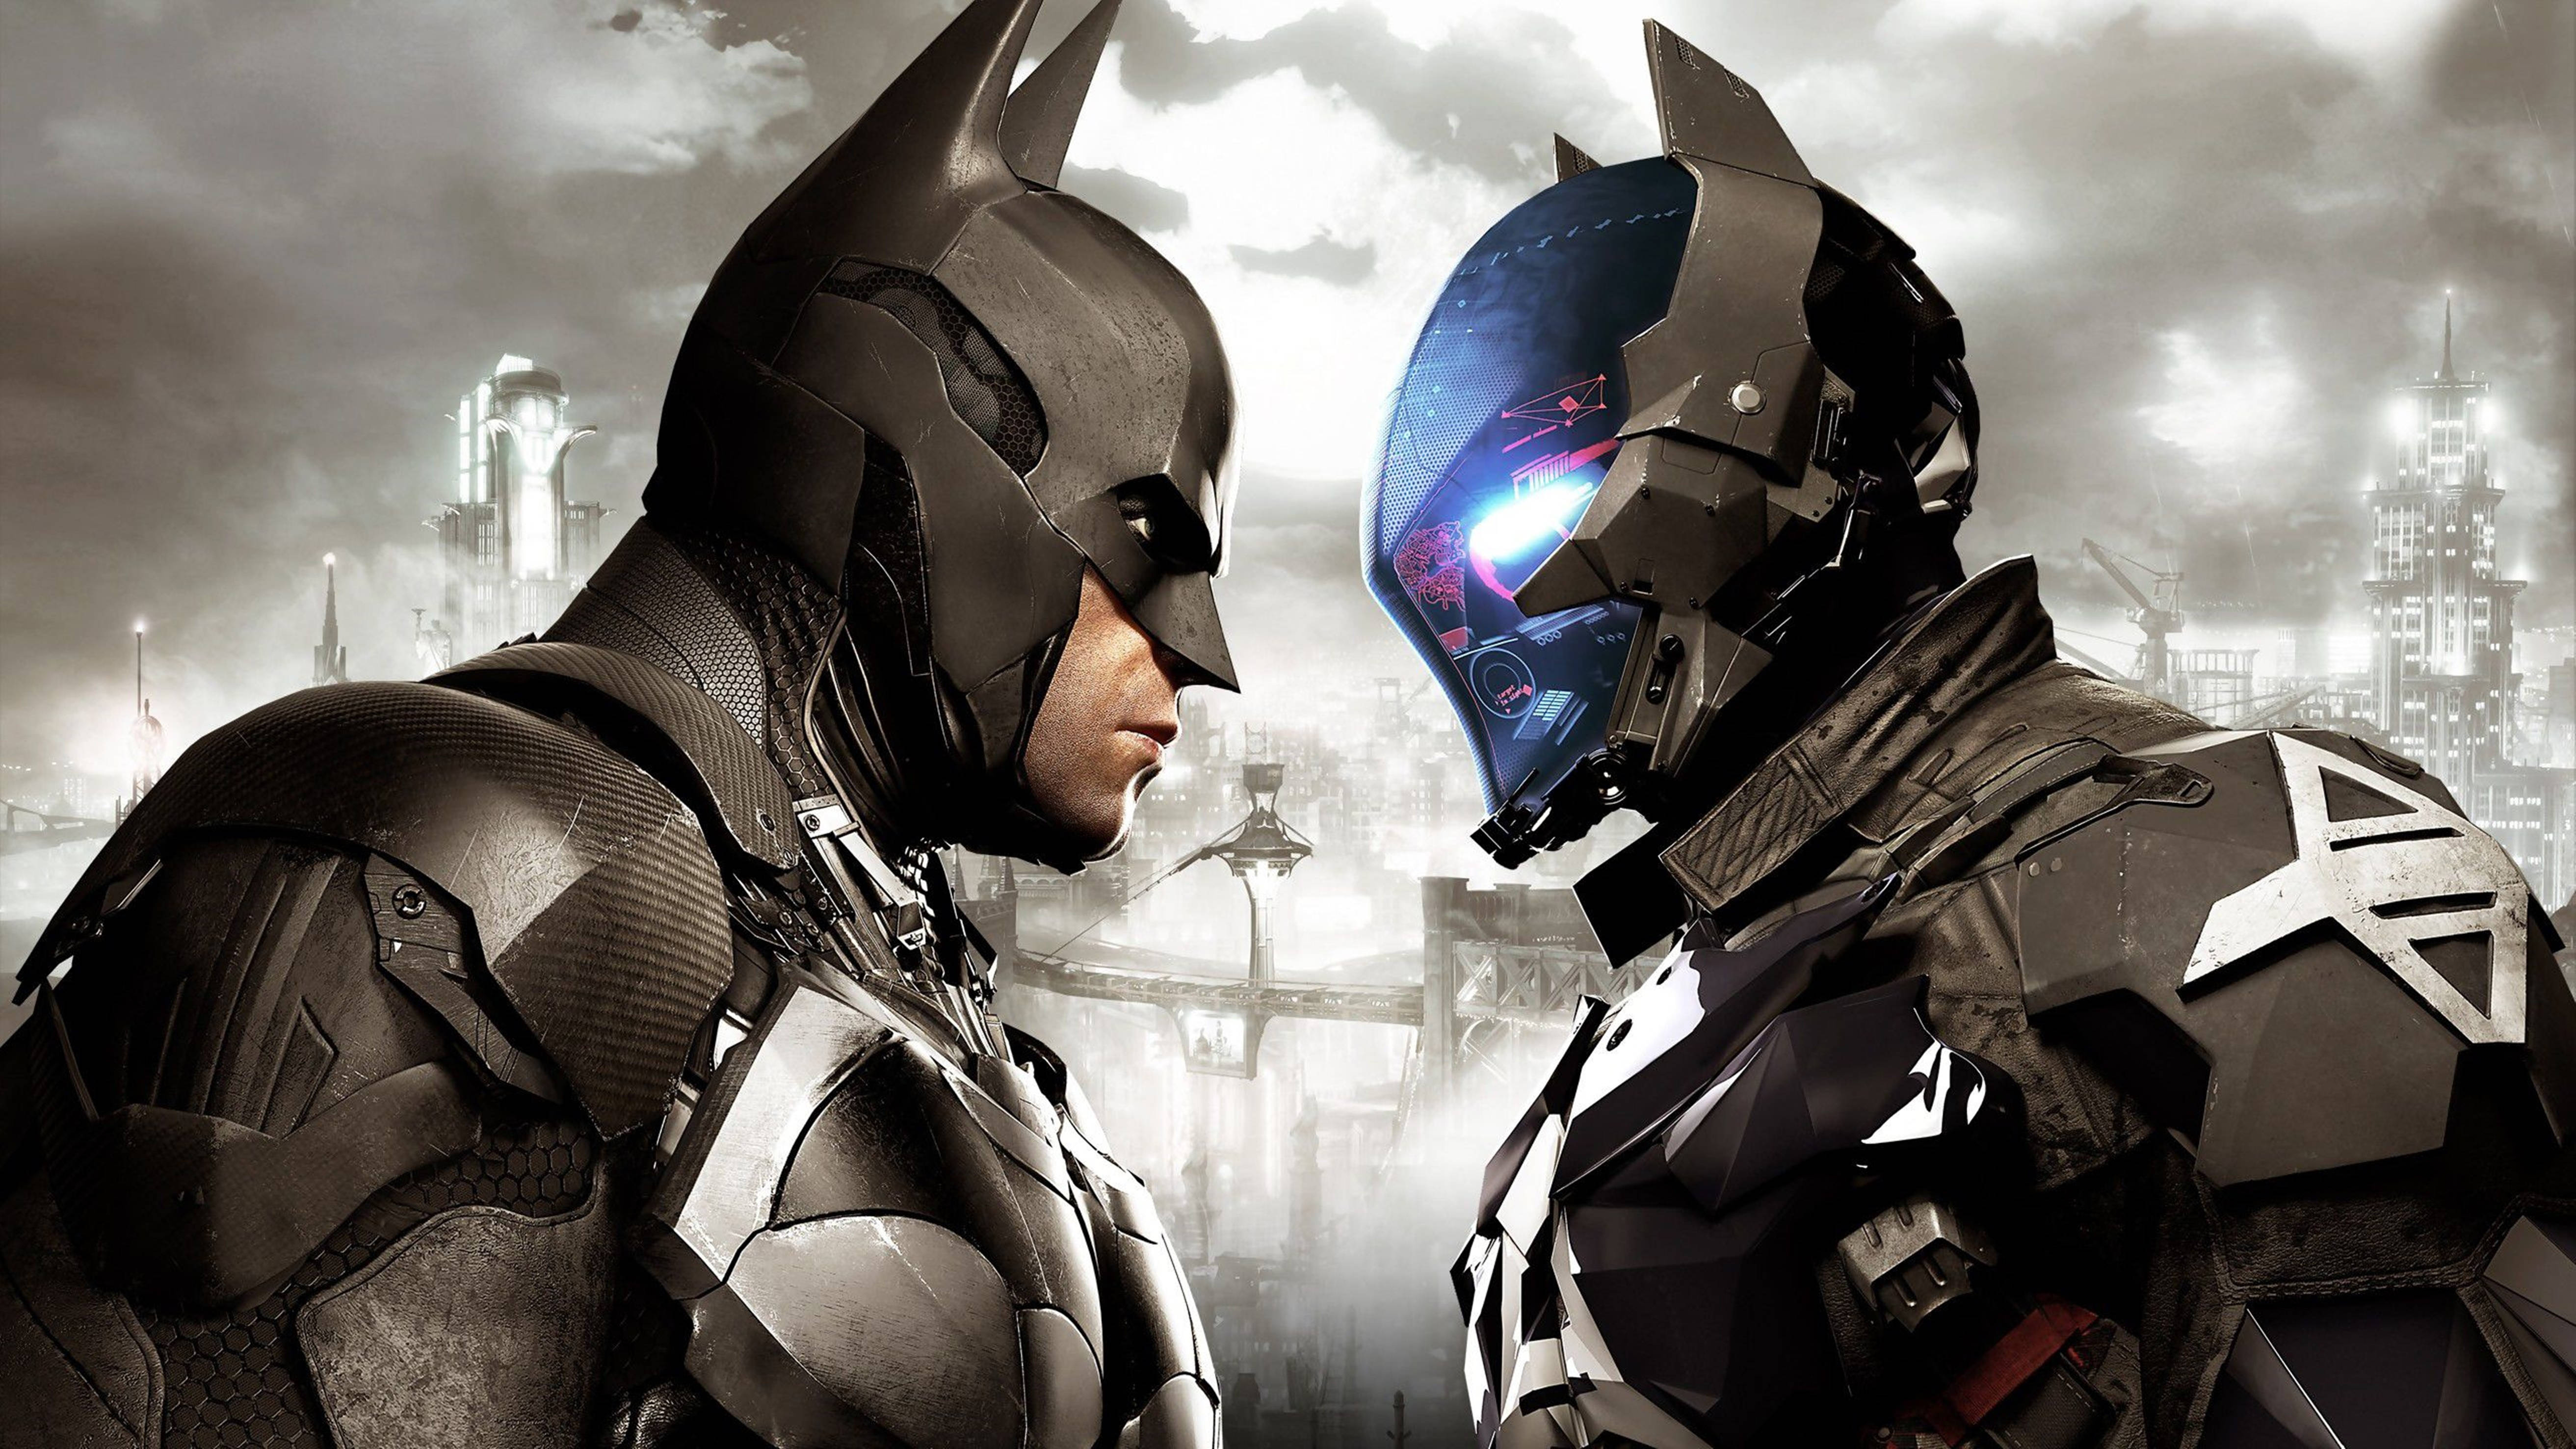 Batman Vs. Knight Arkham City 4k Wallpaper